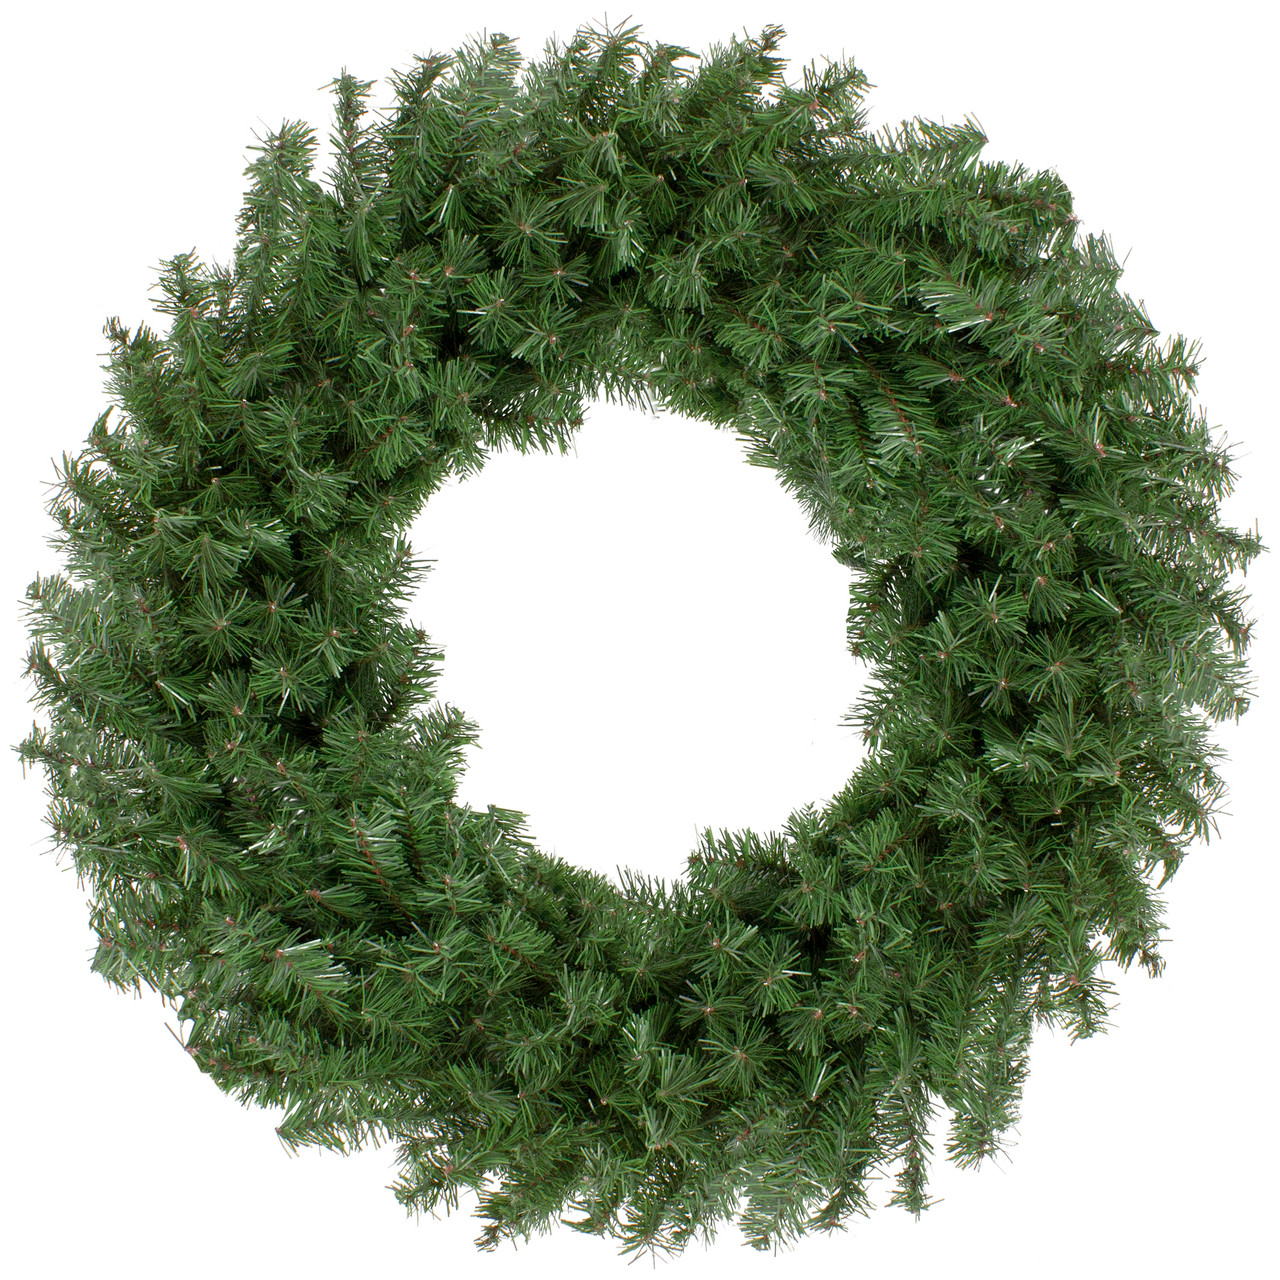 Canadian Pine 30 inch unlit Christmas wreath